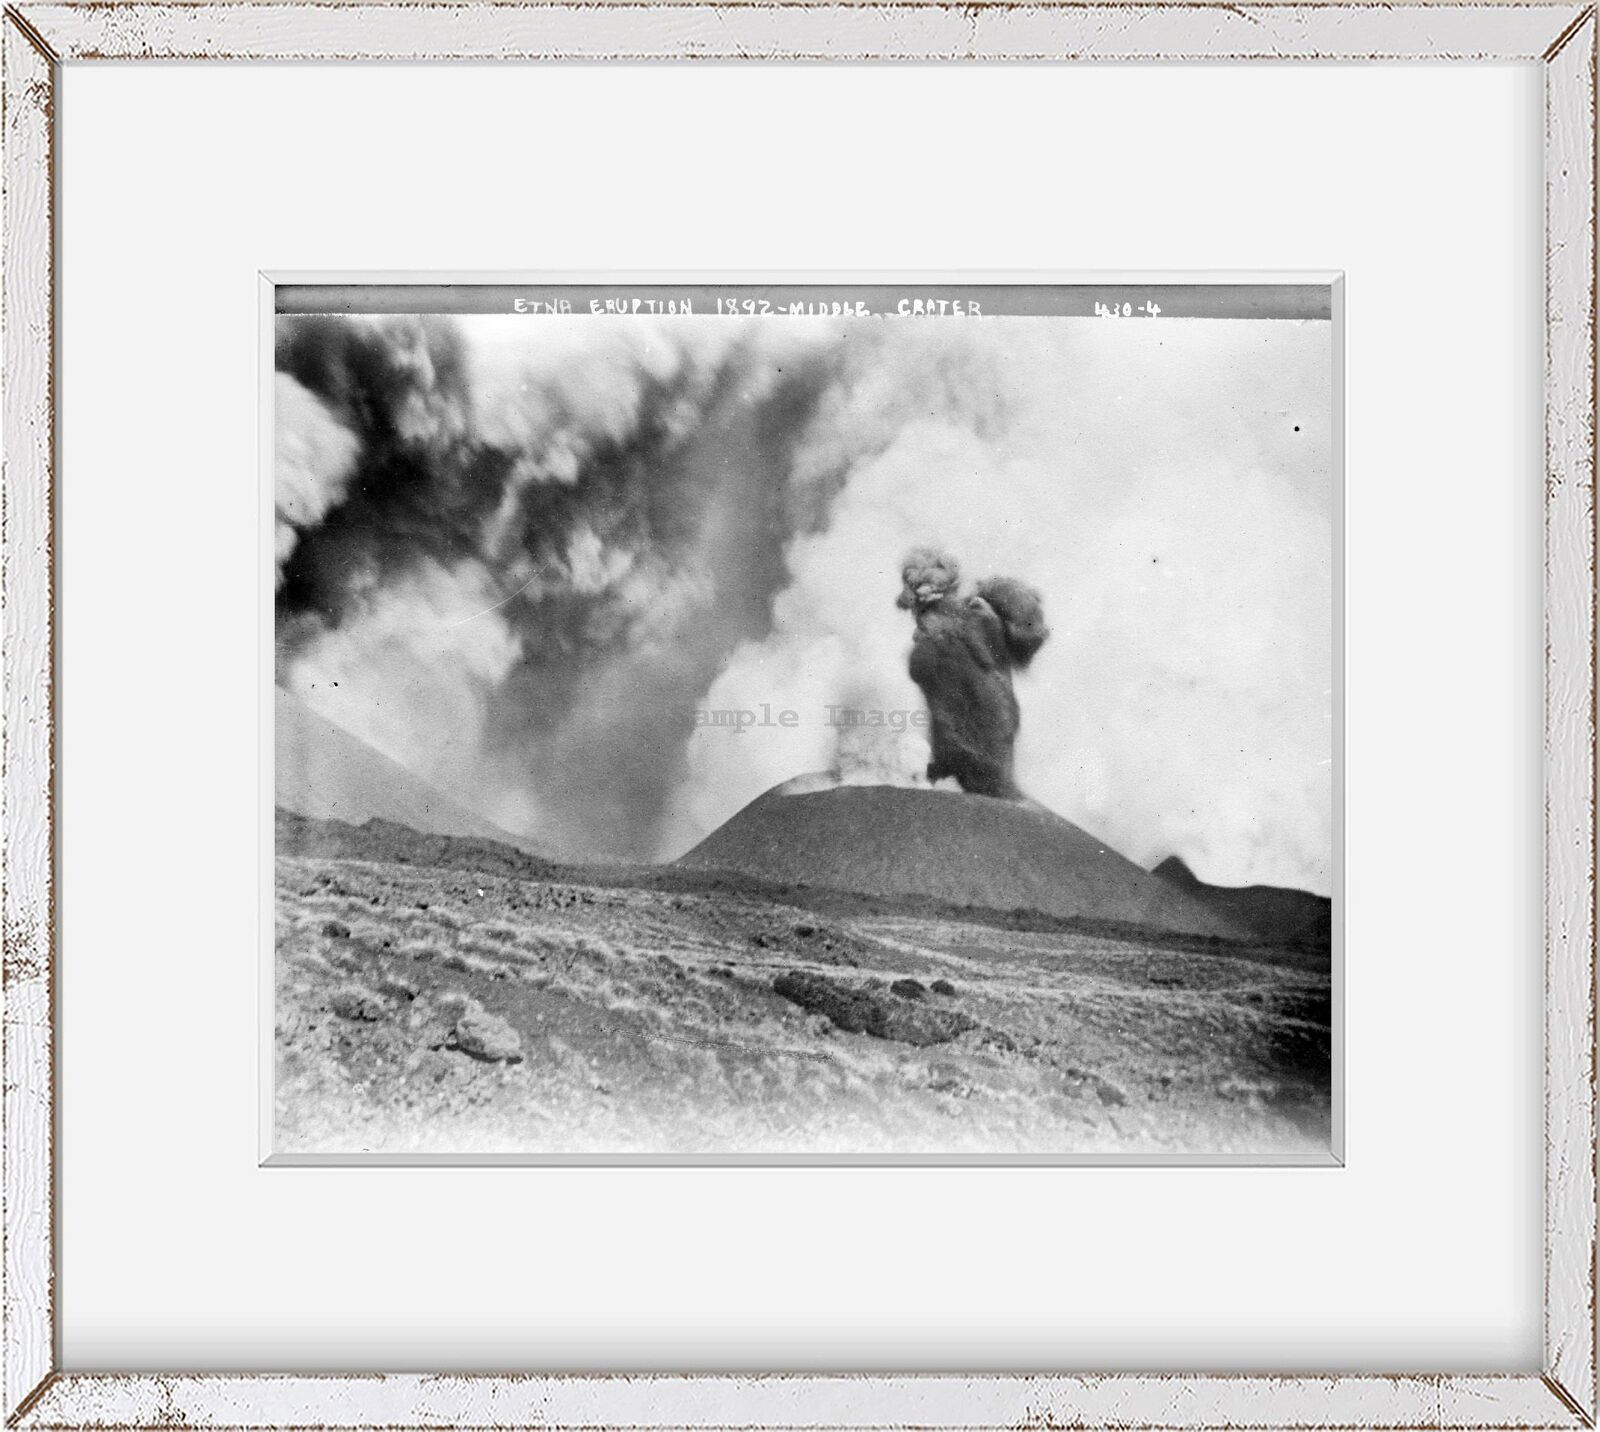 1911 Photo Etna eruption 1892 - Middle crater